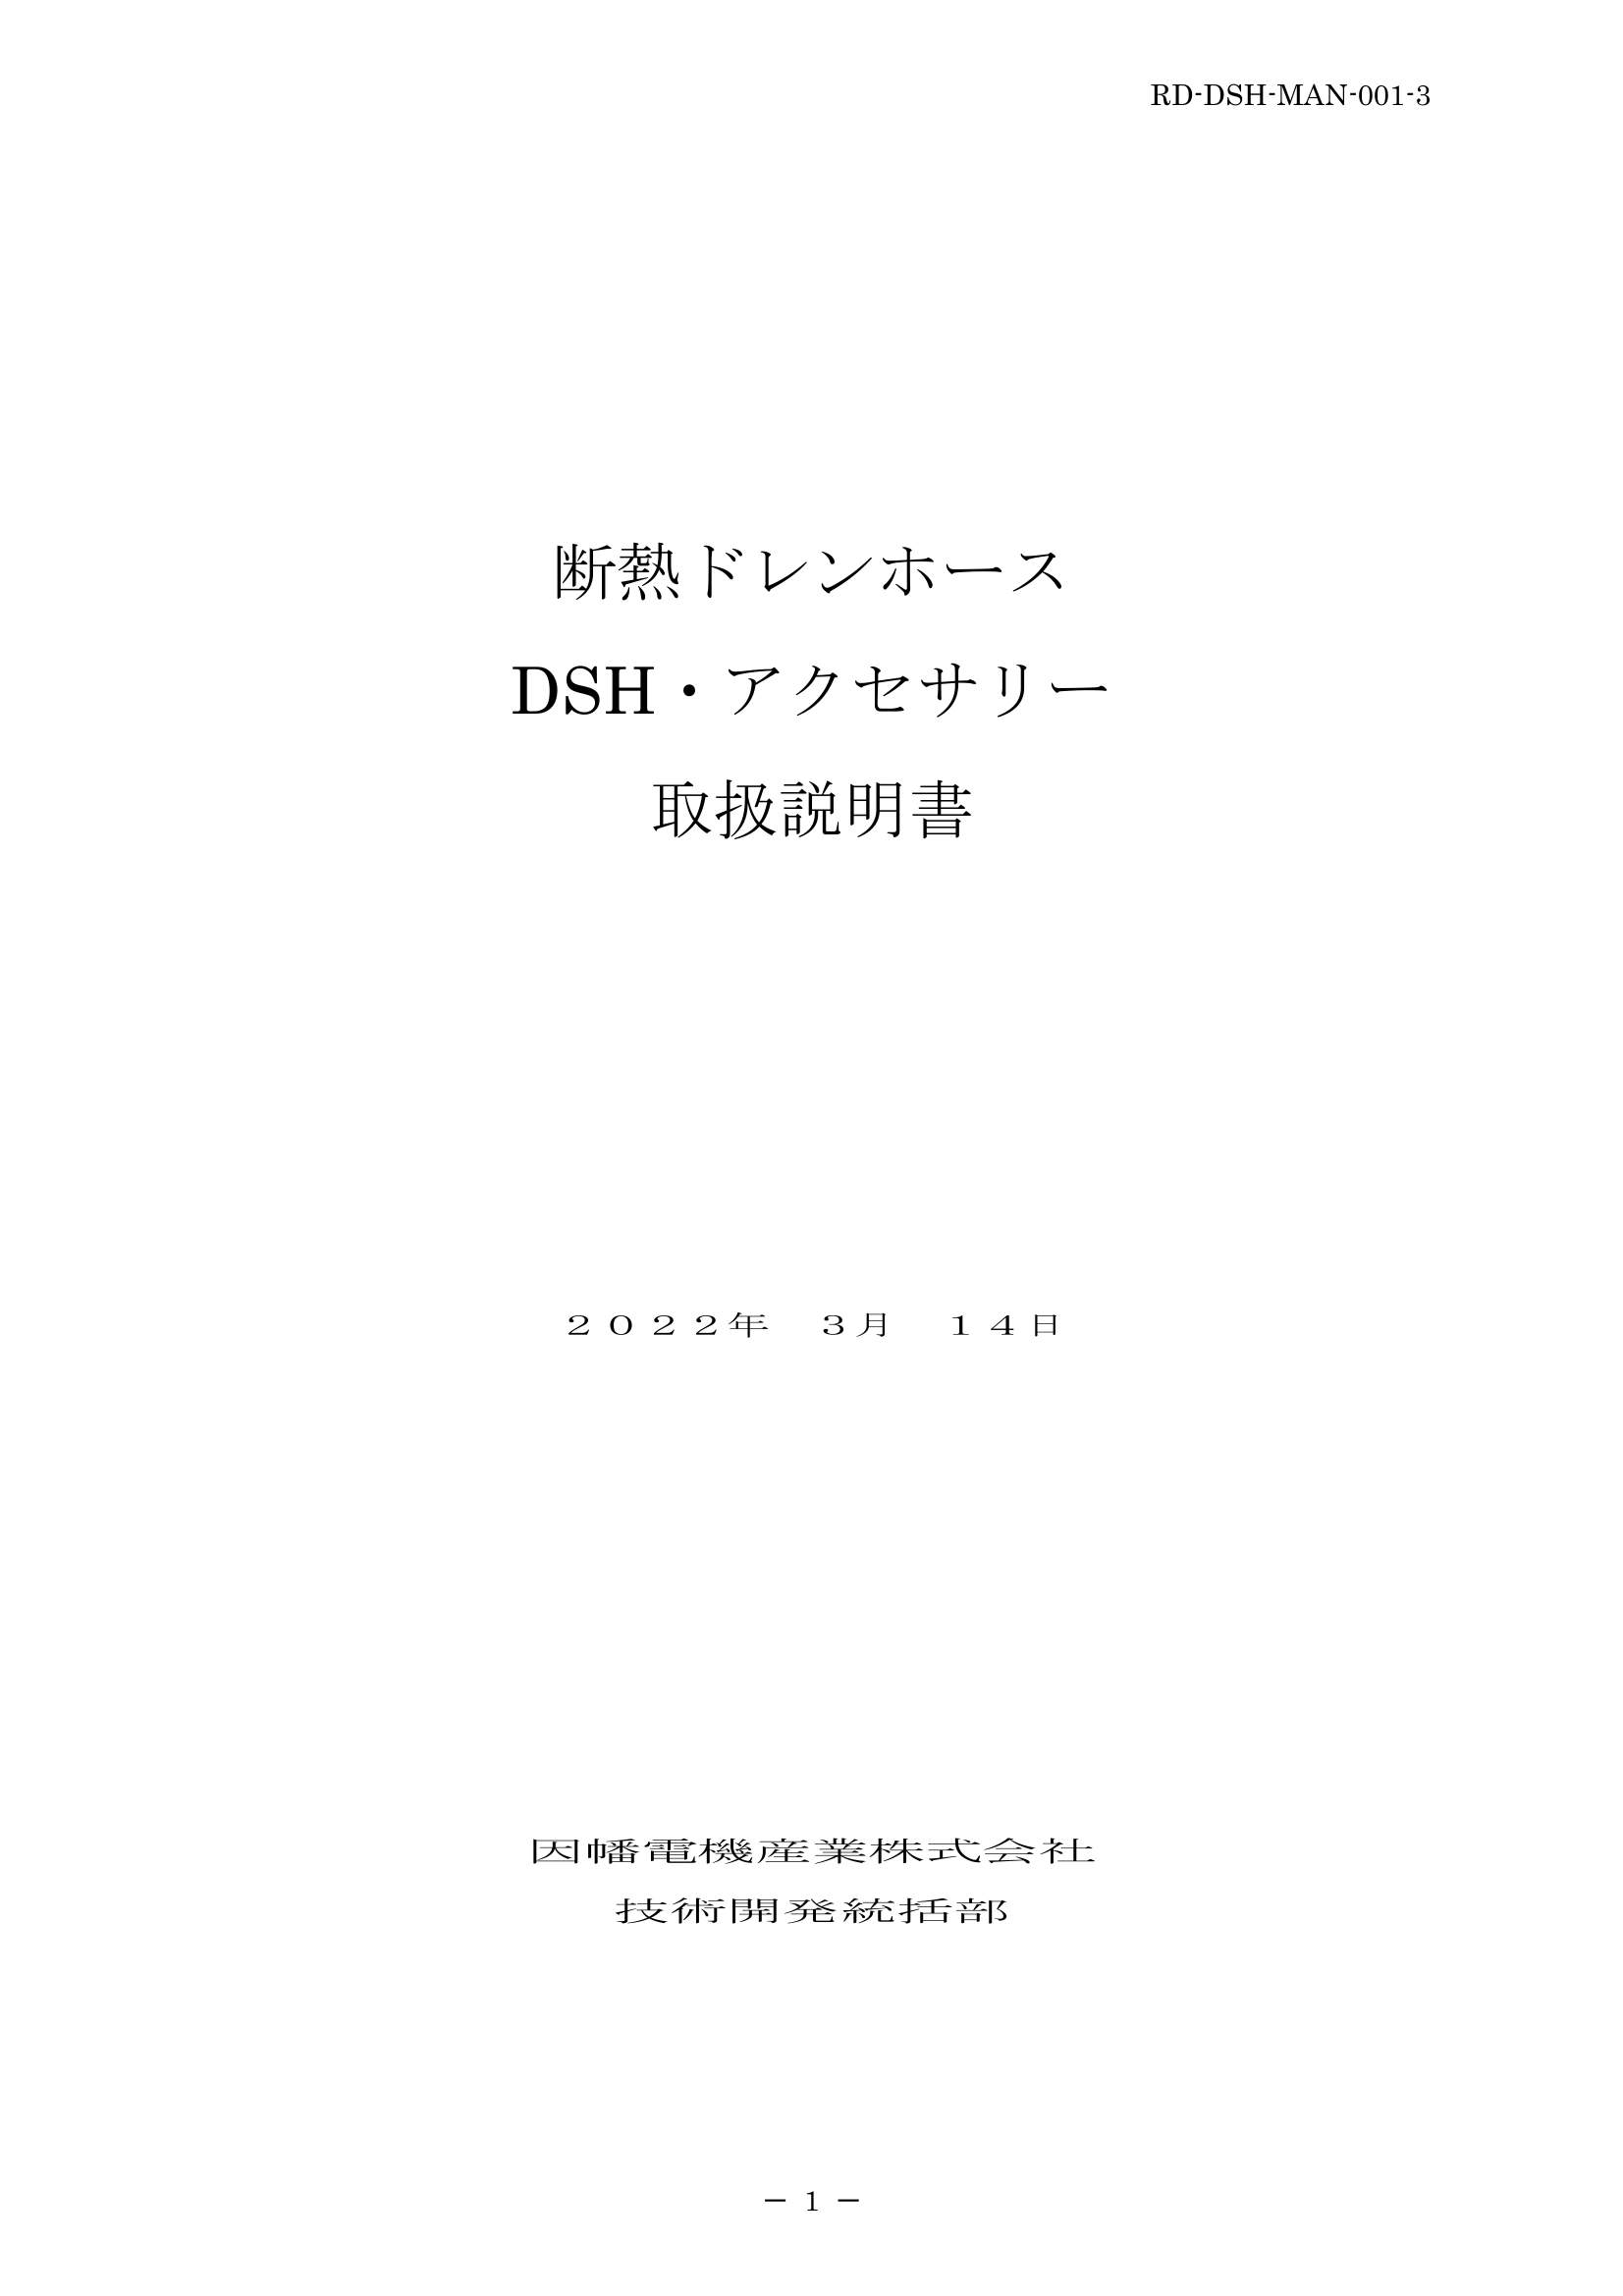 DSH_取扱説明書_20220314.pdf